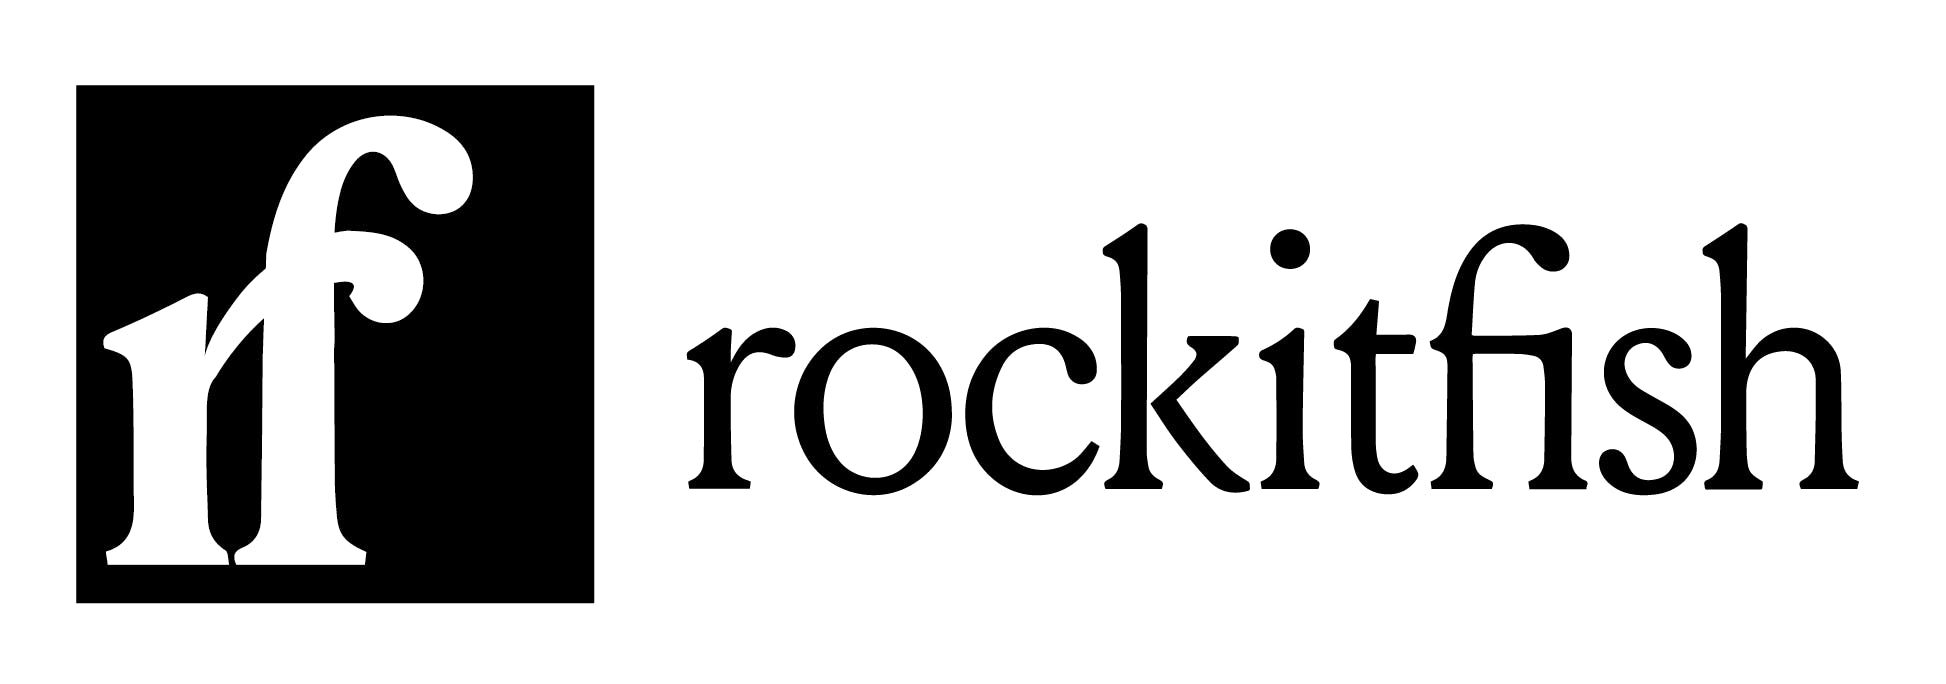 rockitfish logo